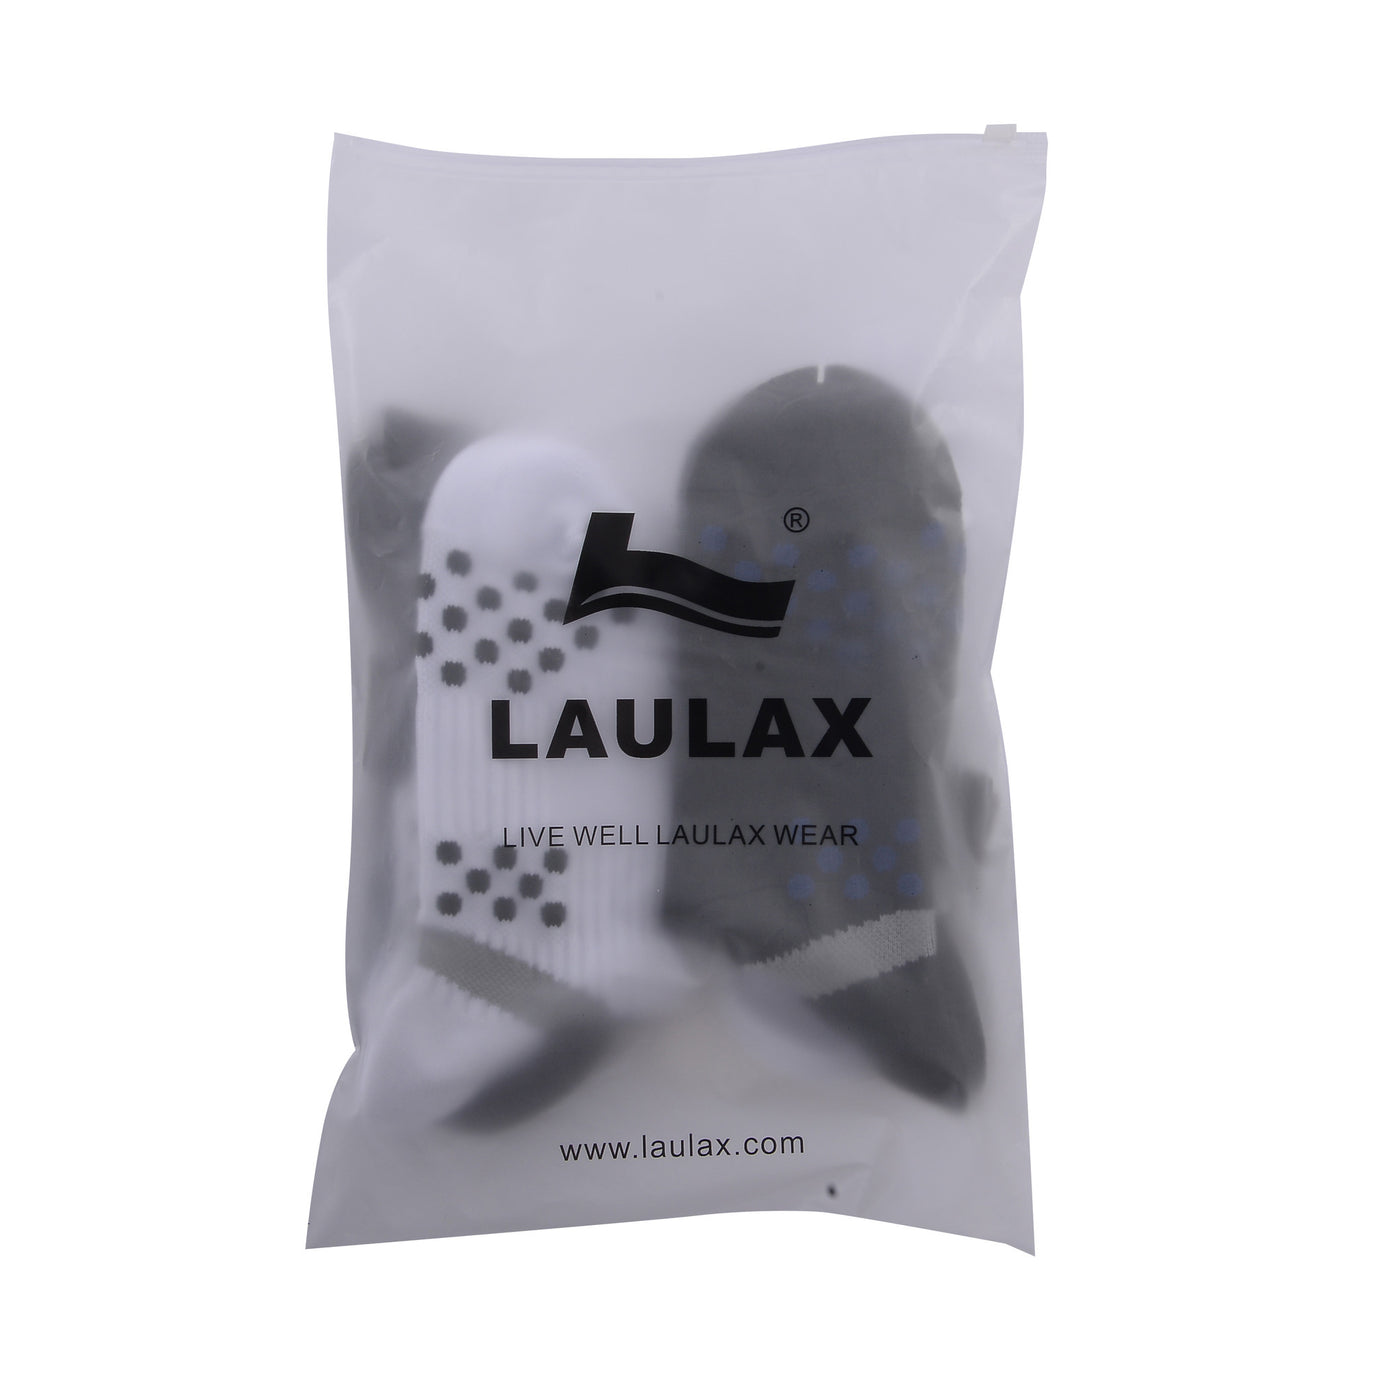 Laulax 4 Pairs Professional Coolmax Compression Massage Cycling Socks, Size UK 7 - 11 / Europe 41 - 46, Gift Set